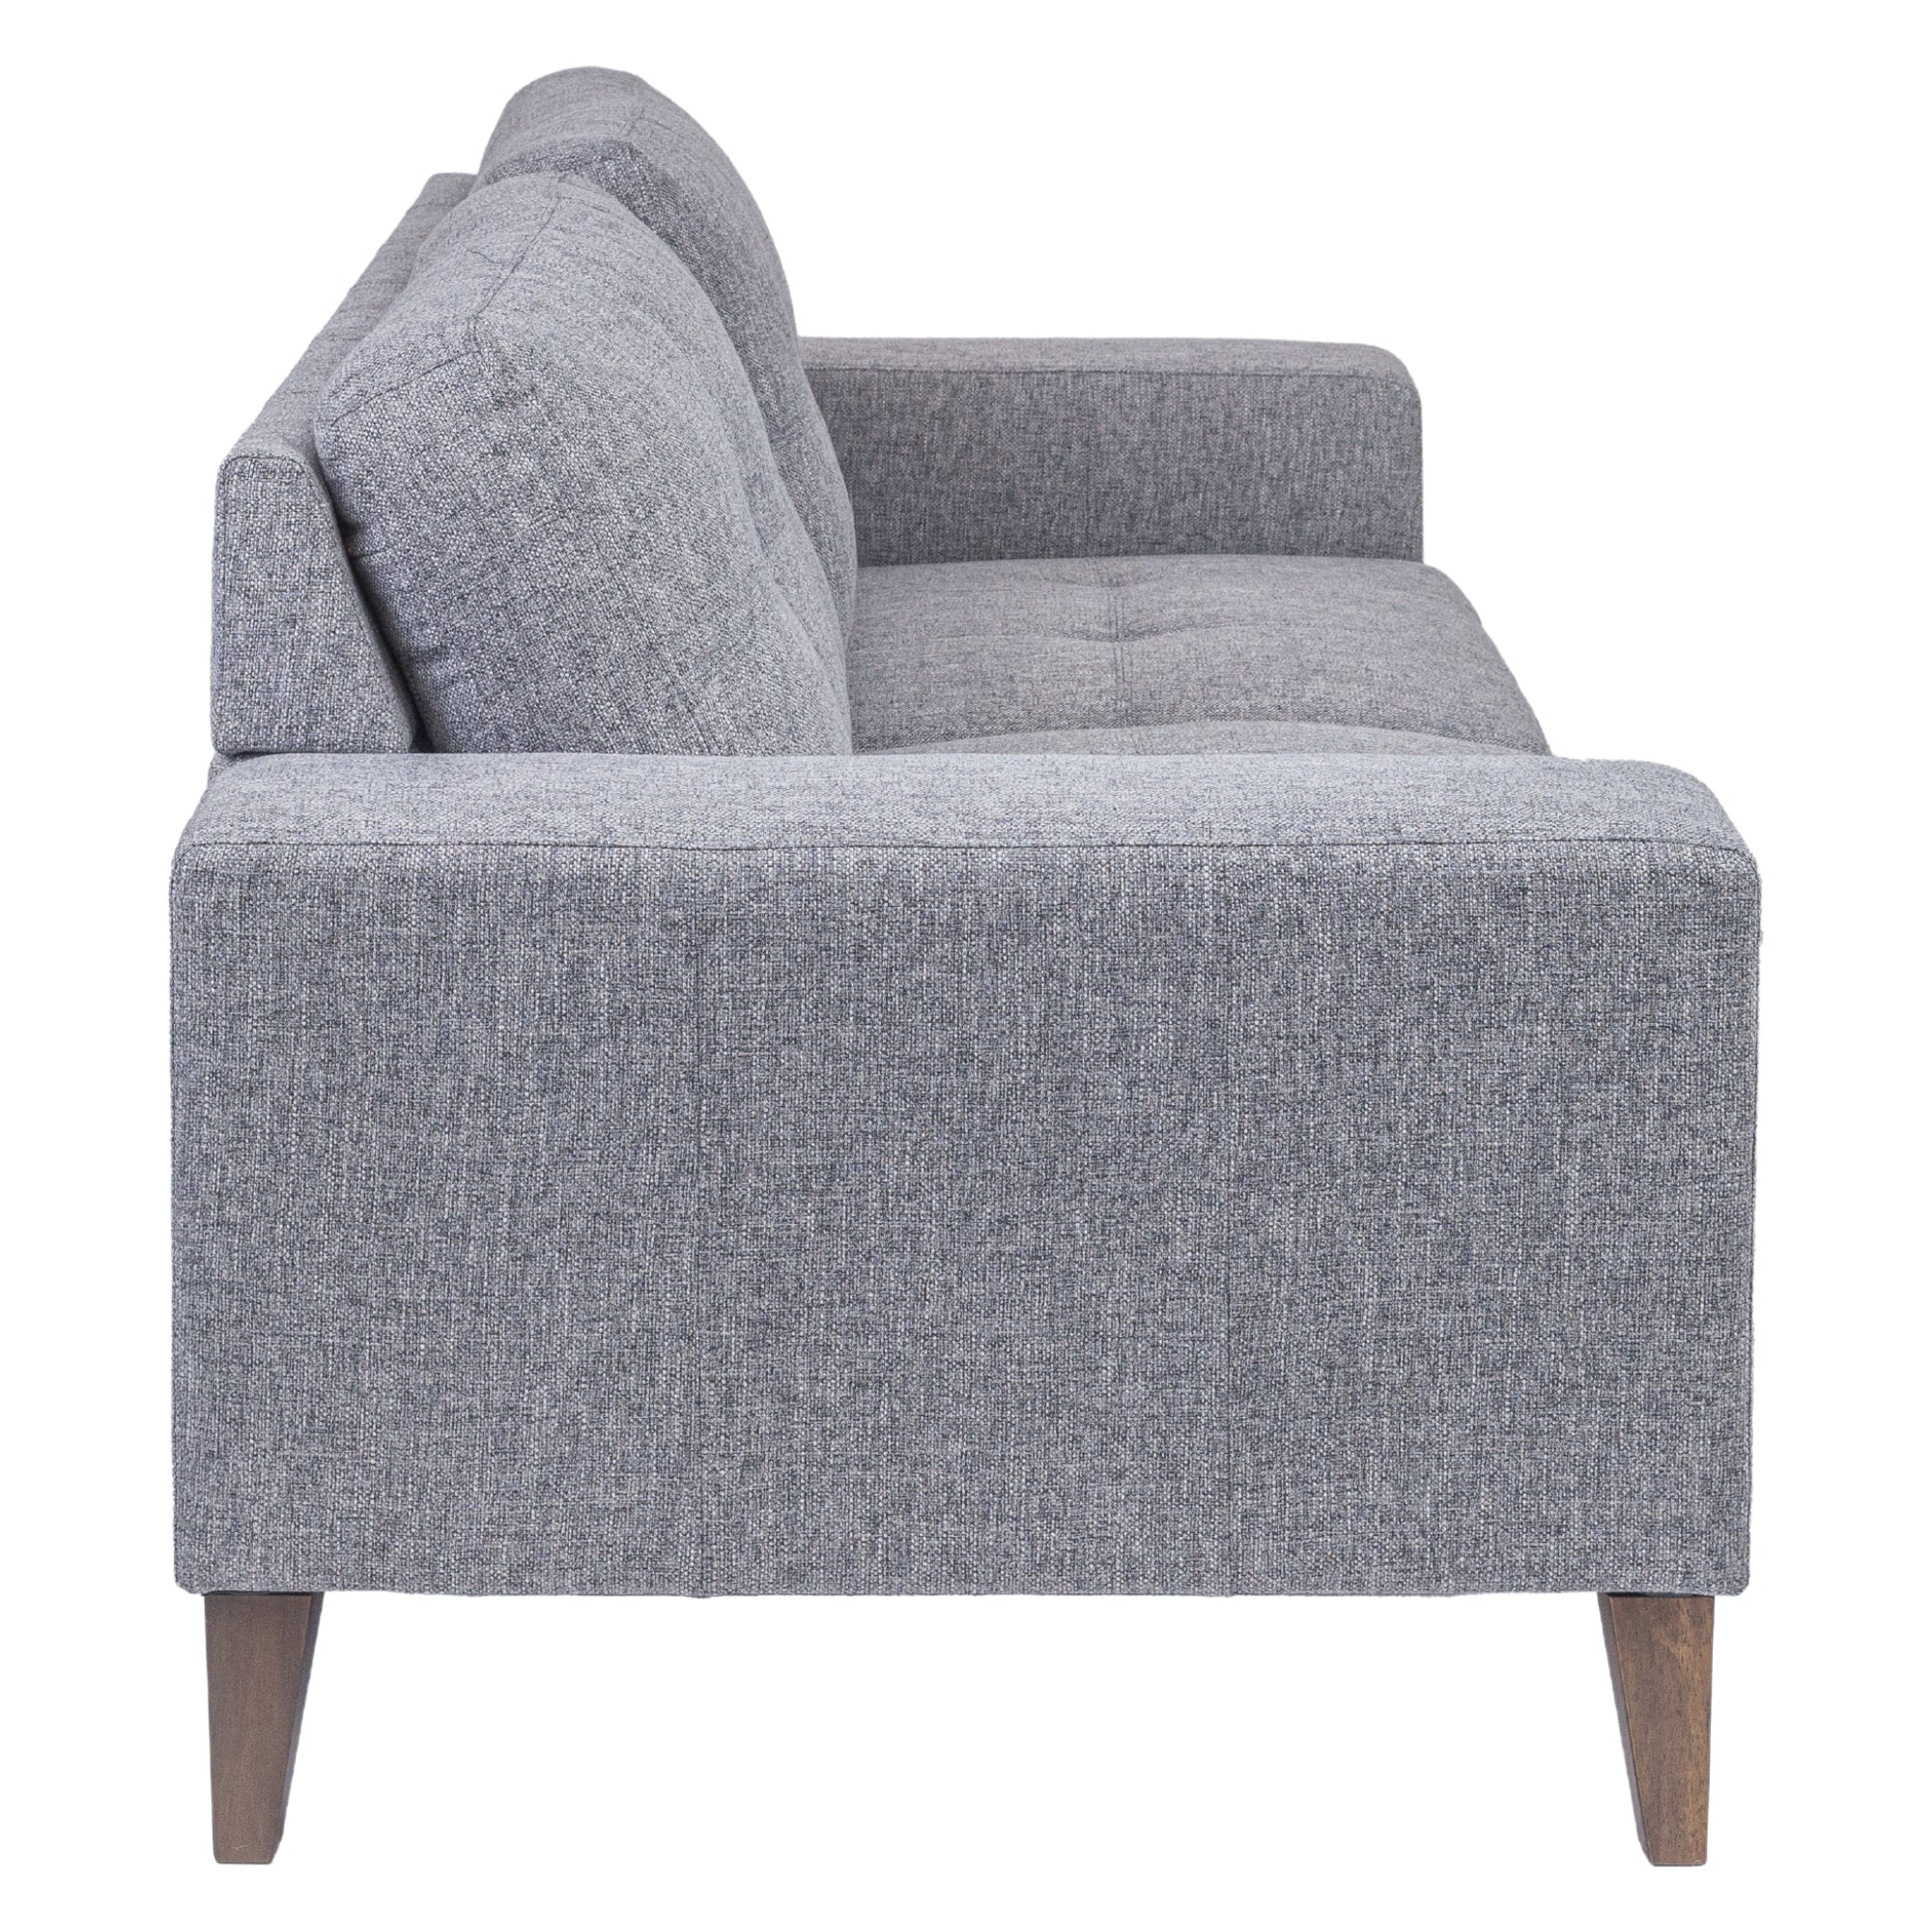 Mid-Century 2+3 Seater Sofa Set, Grey, Soft Fabric Upholstery